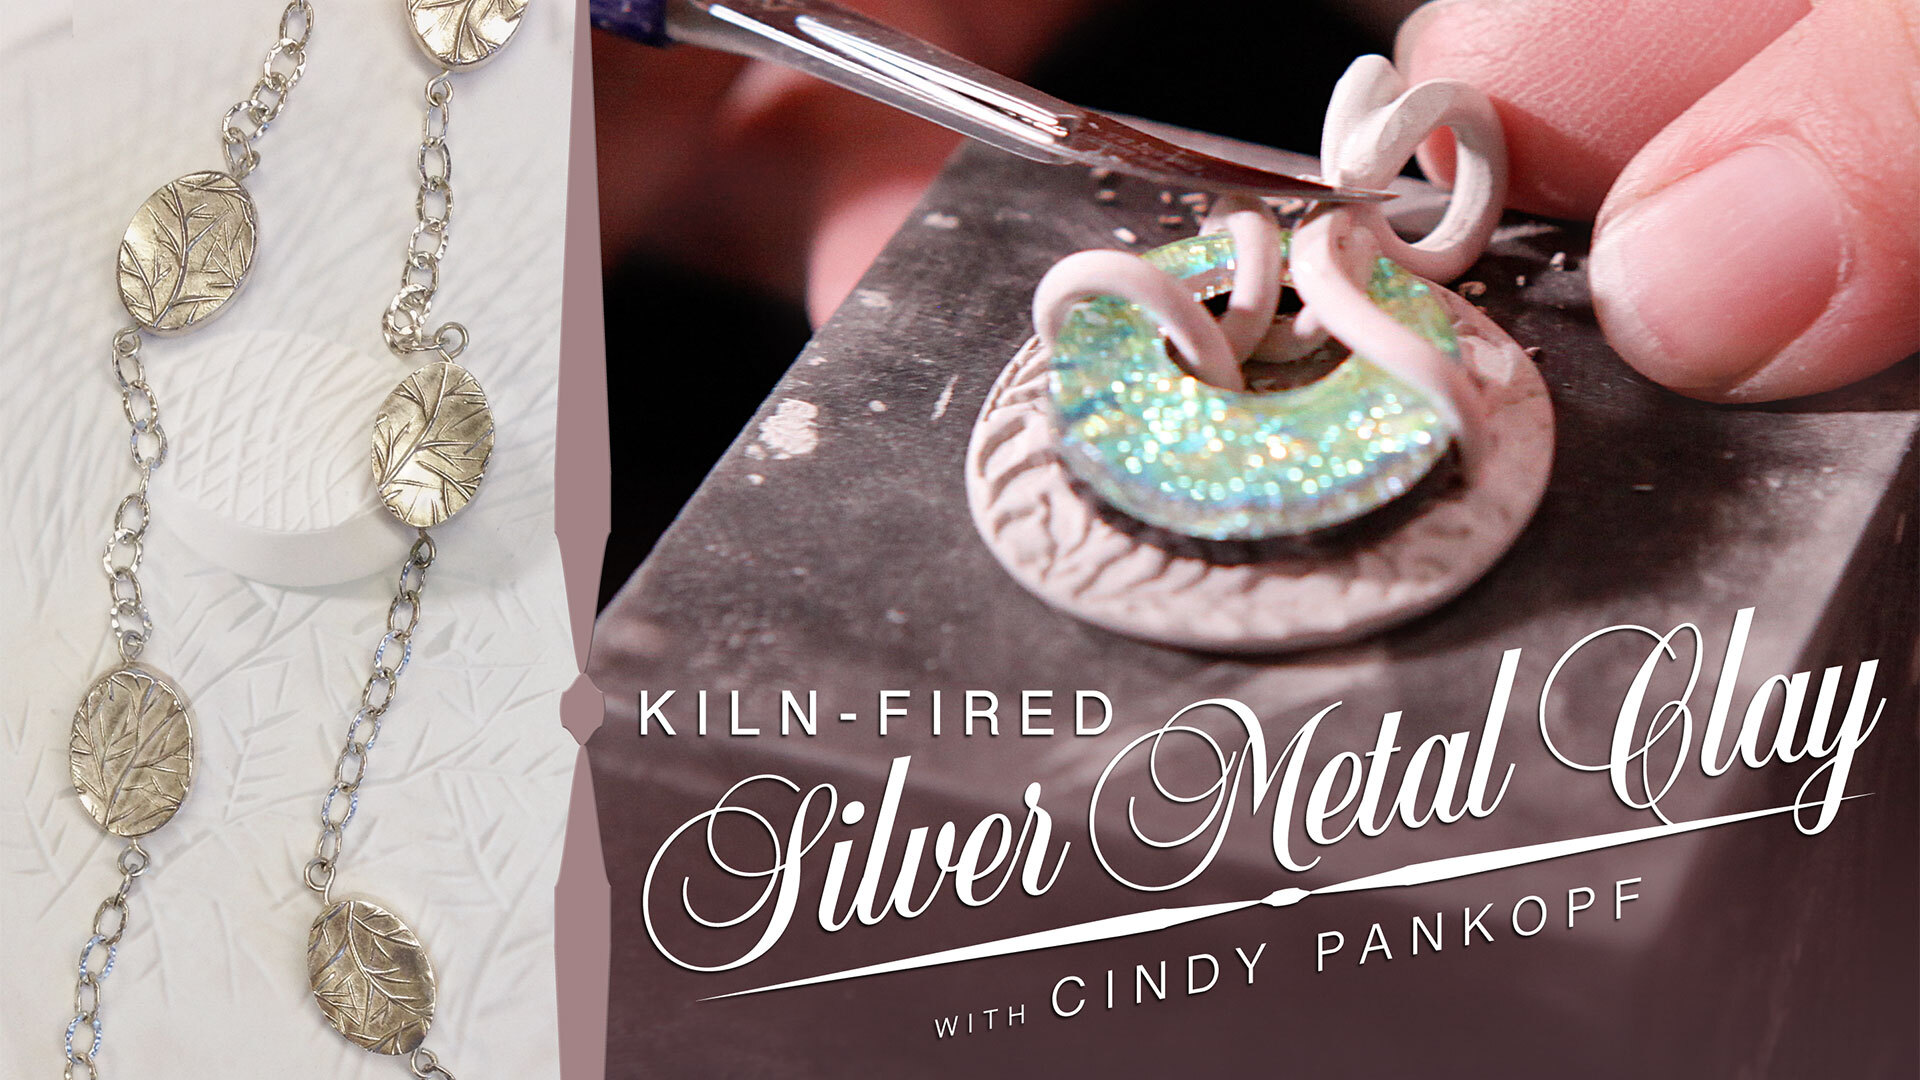 Jewellery Making Weekend: Enameling and Silver Clay – Field